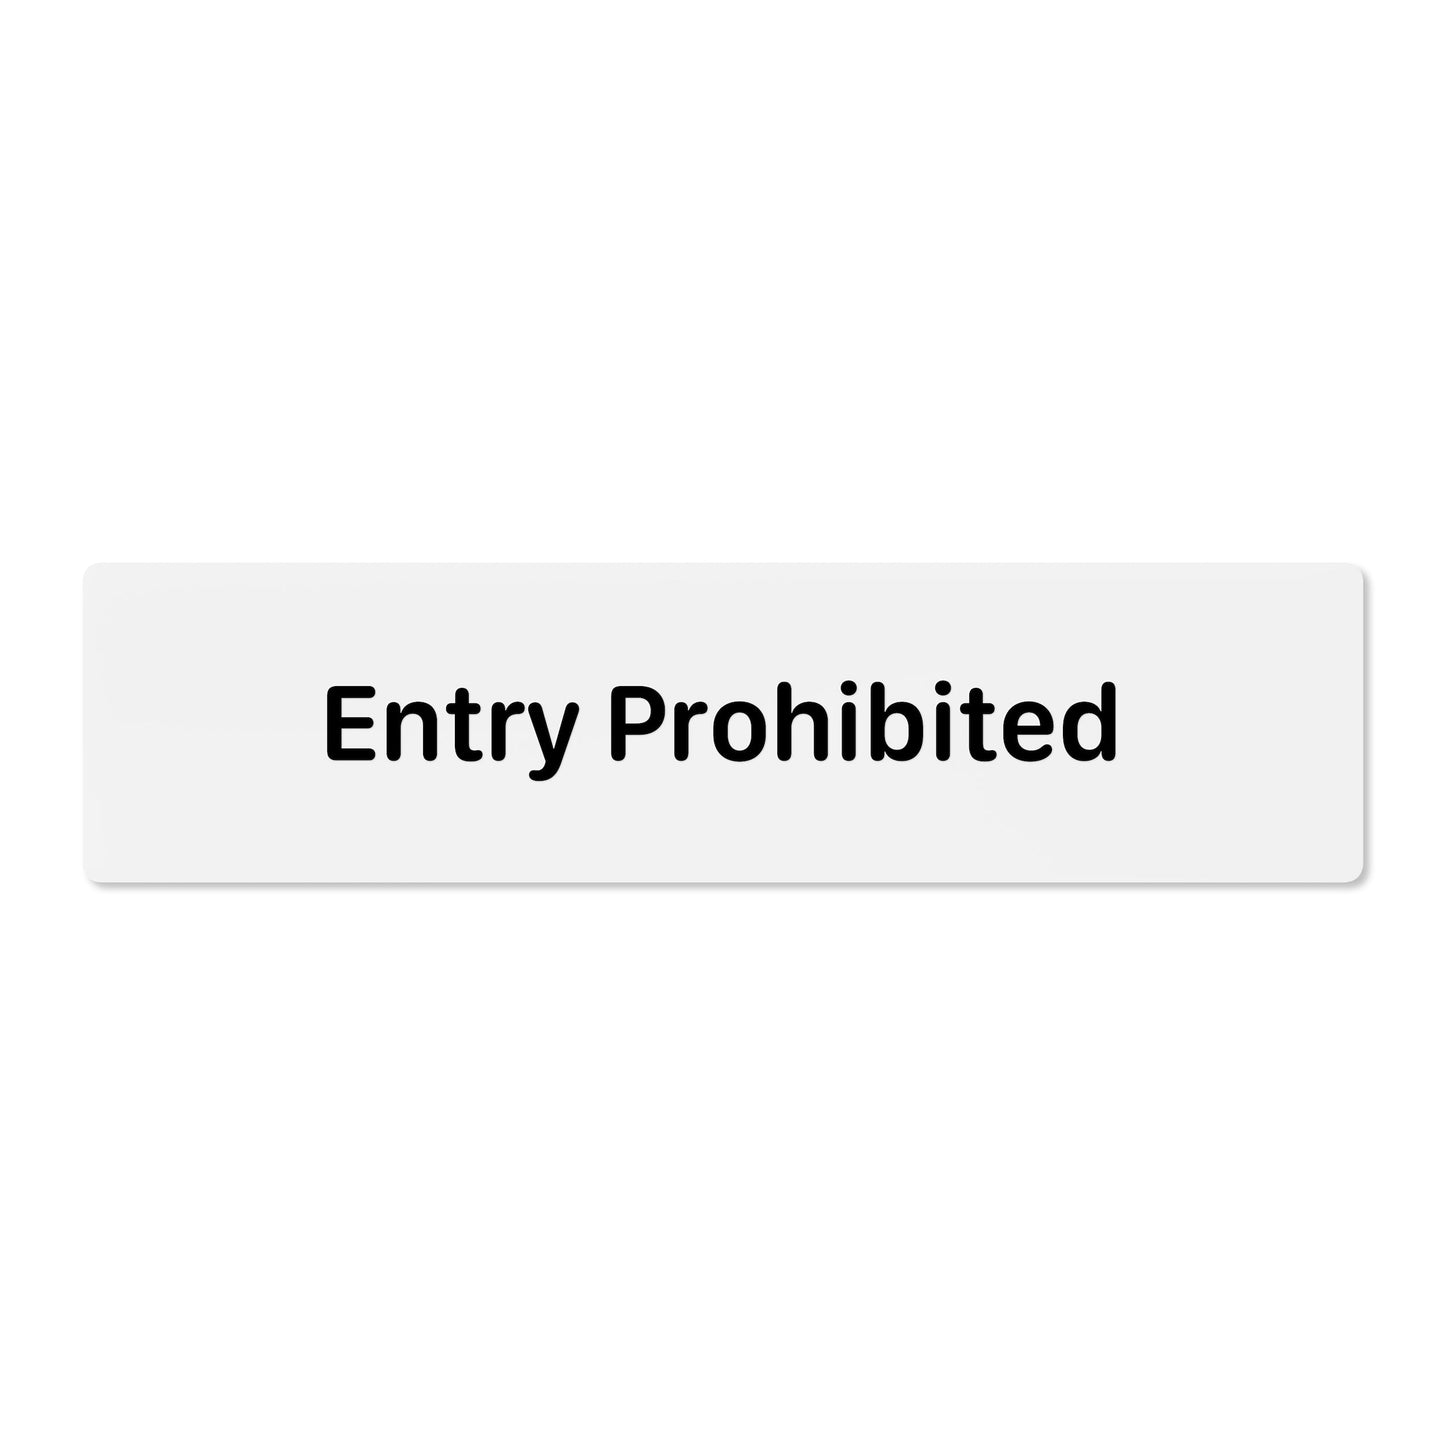 Entry Prohibited